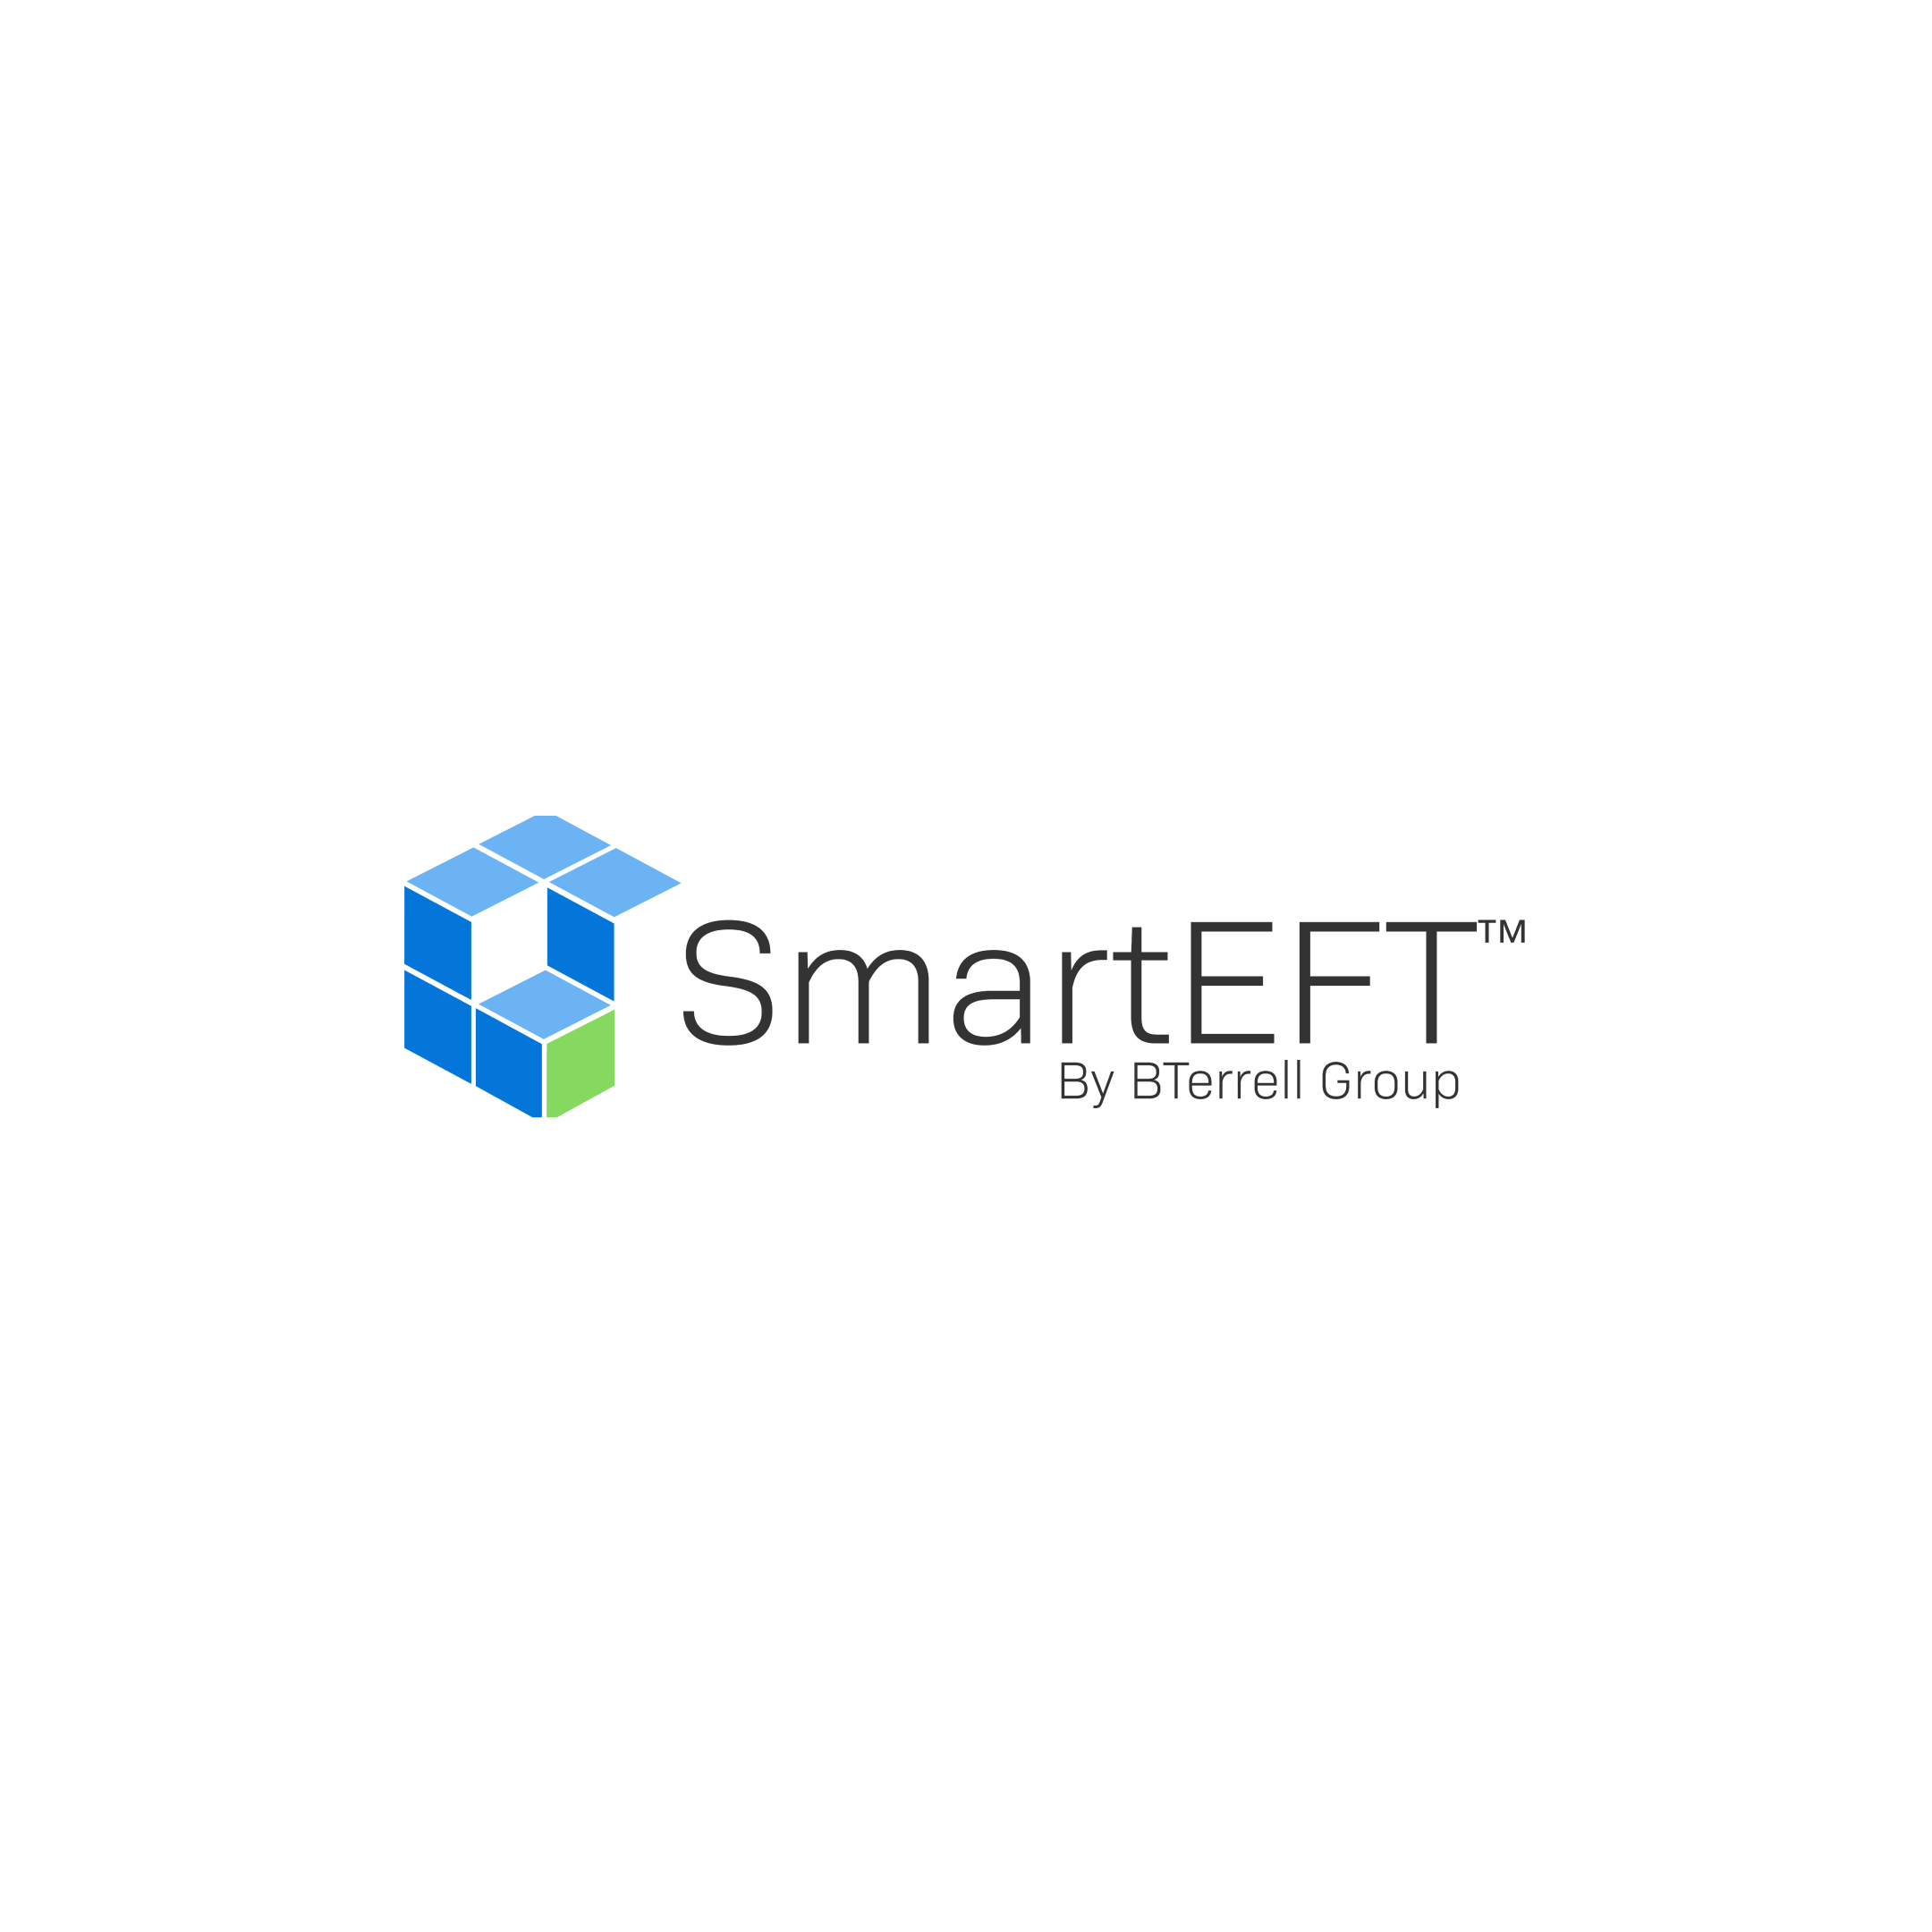 SmartETF